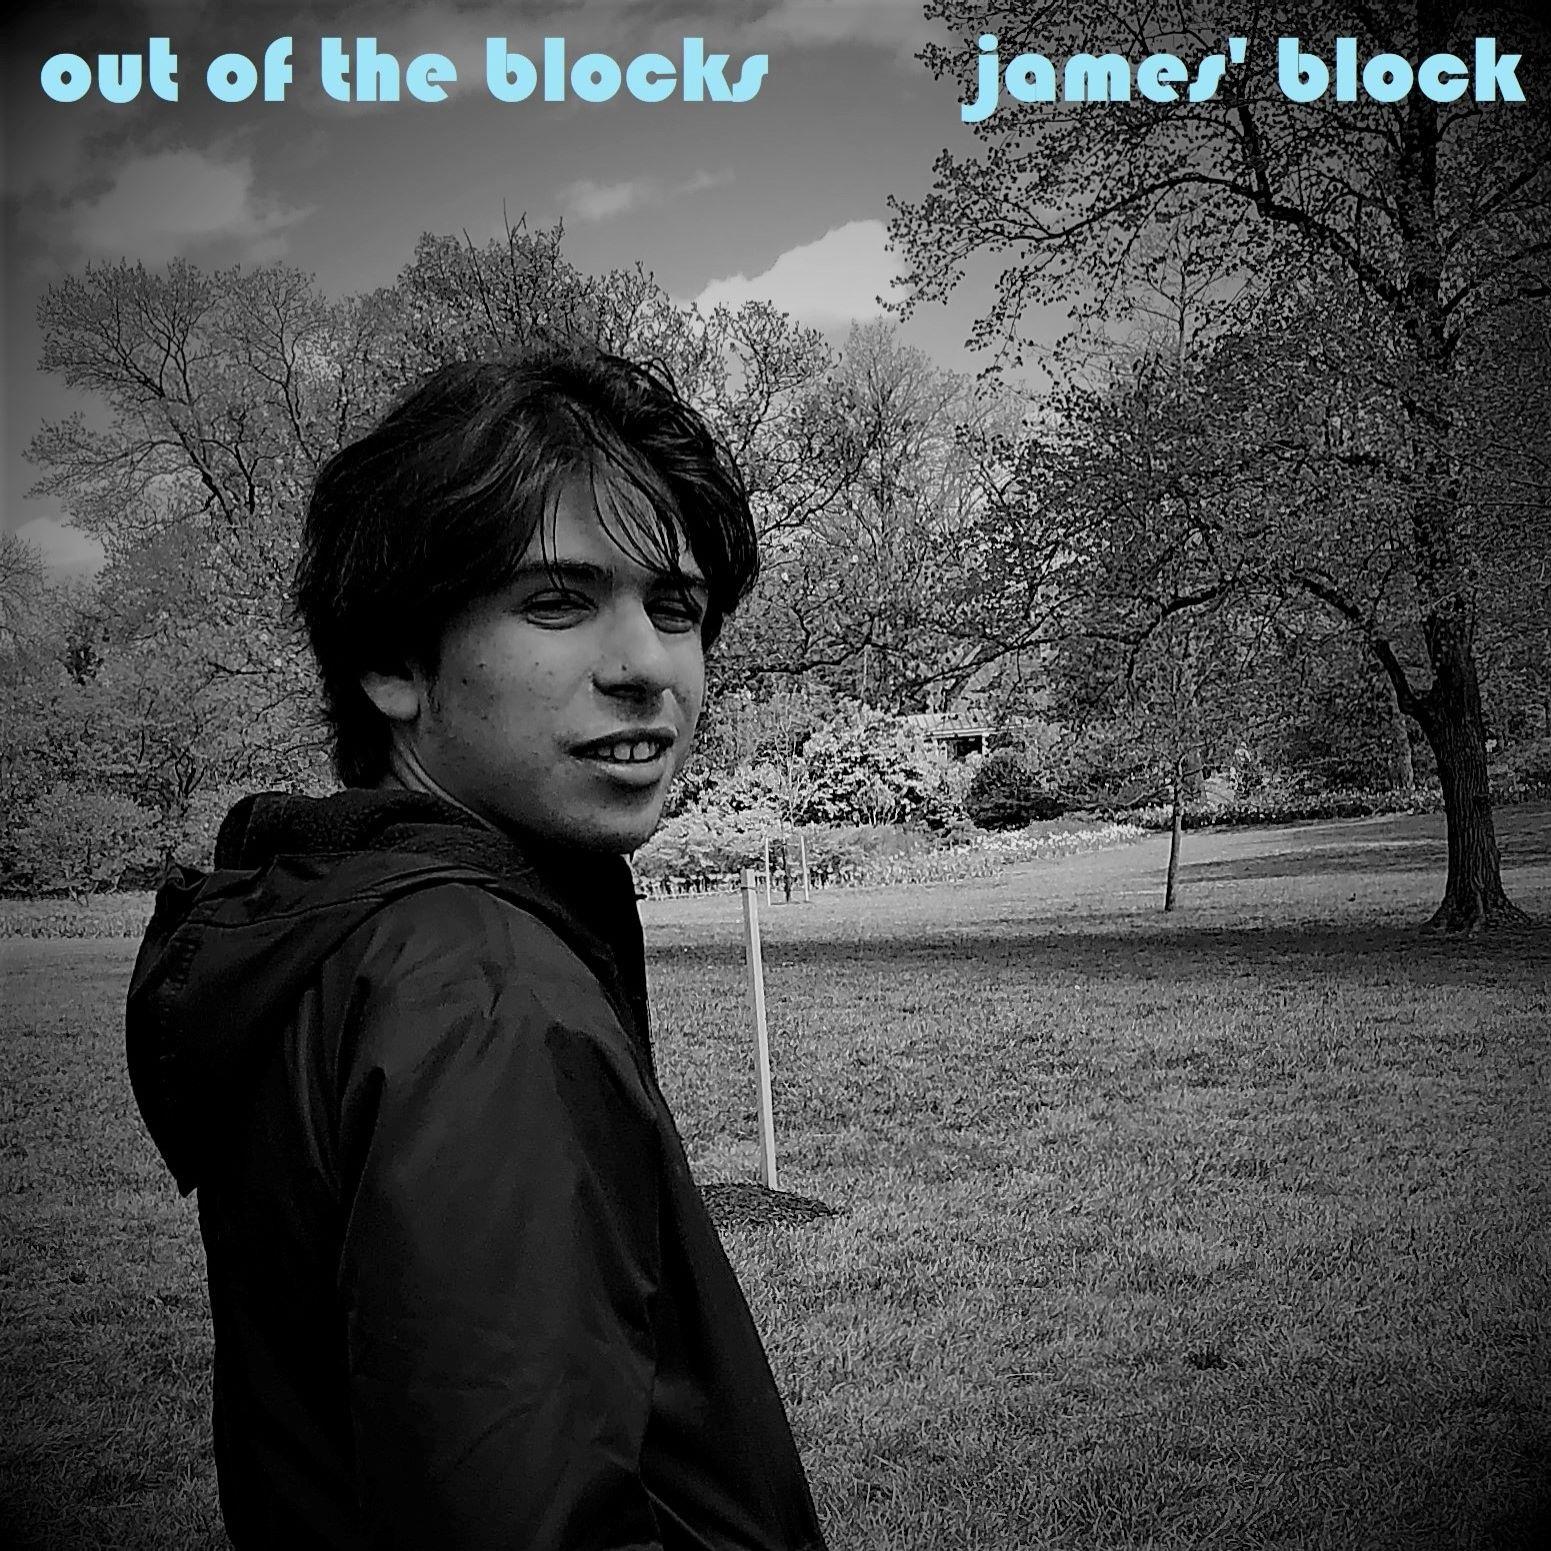 Thumbnail for "James' Block: An Outlier".